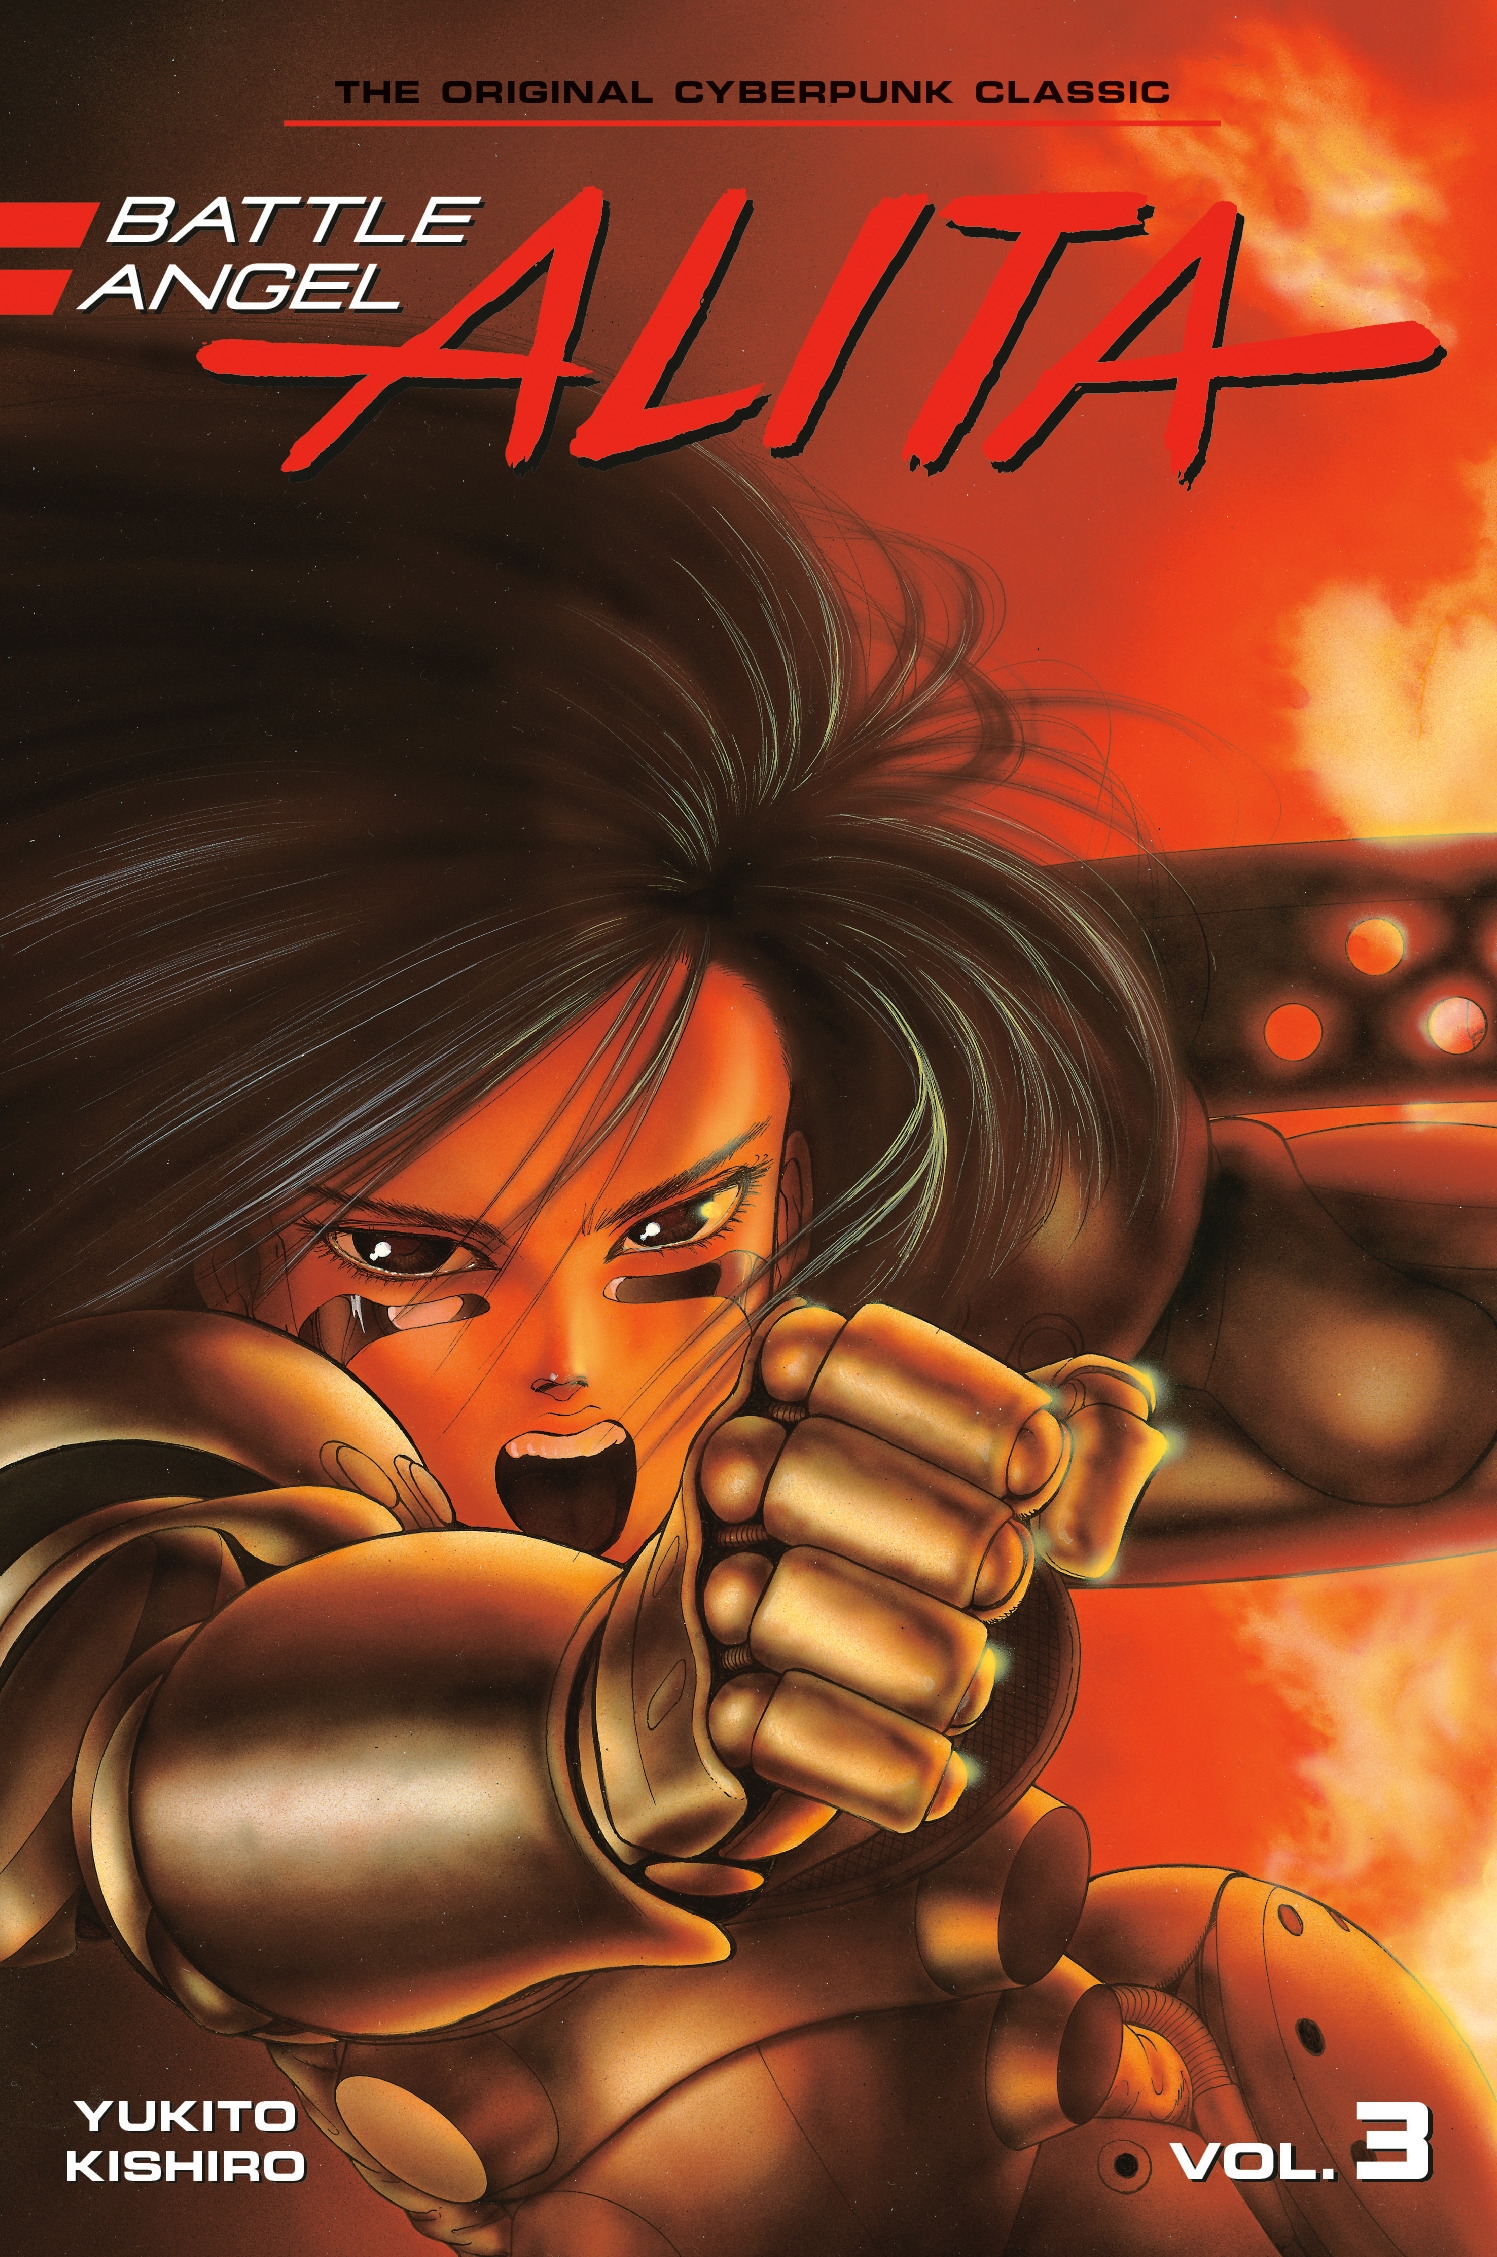 Battle Angel Alita 3 (Paperback) by Yukito Kishiro - Penguin Books Australia